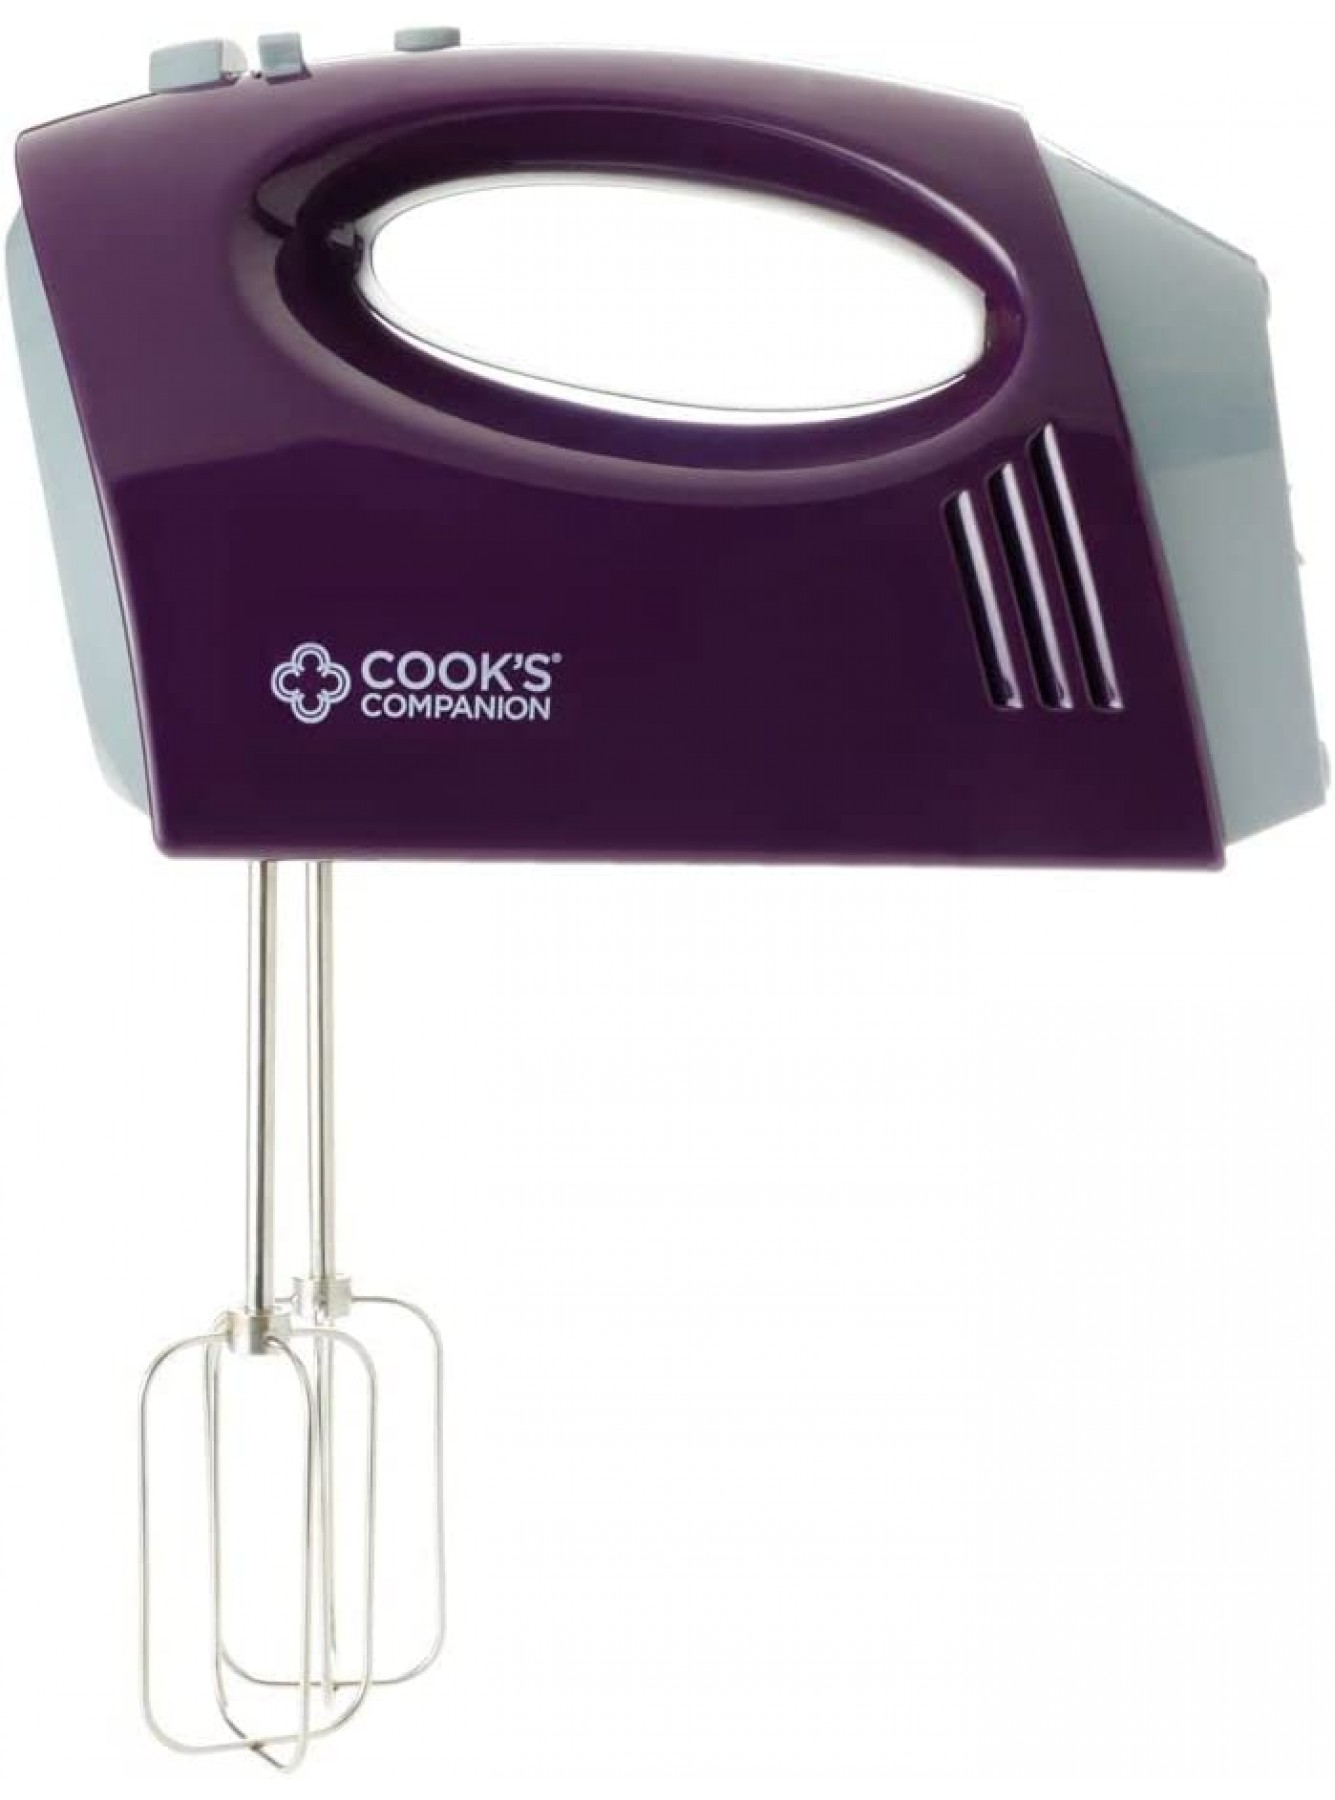 Cook's Companion 220W 5-Speed Hand Mixer W Retractable Cordcolor Plum No B09FFW2ZVQ